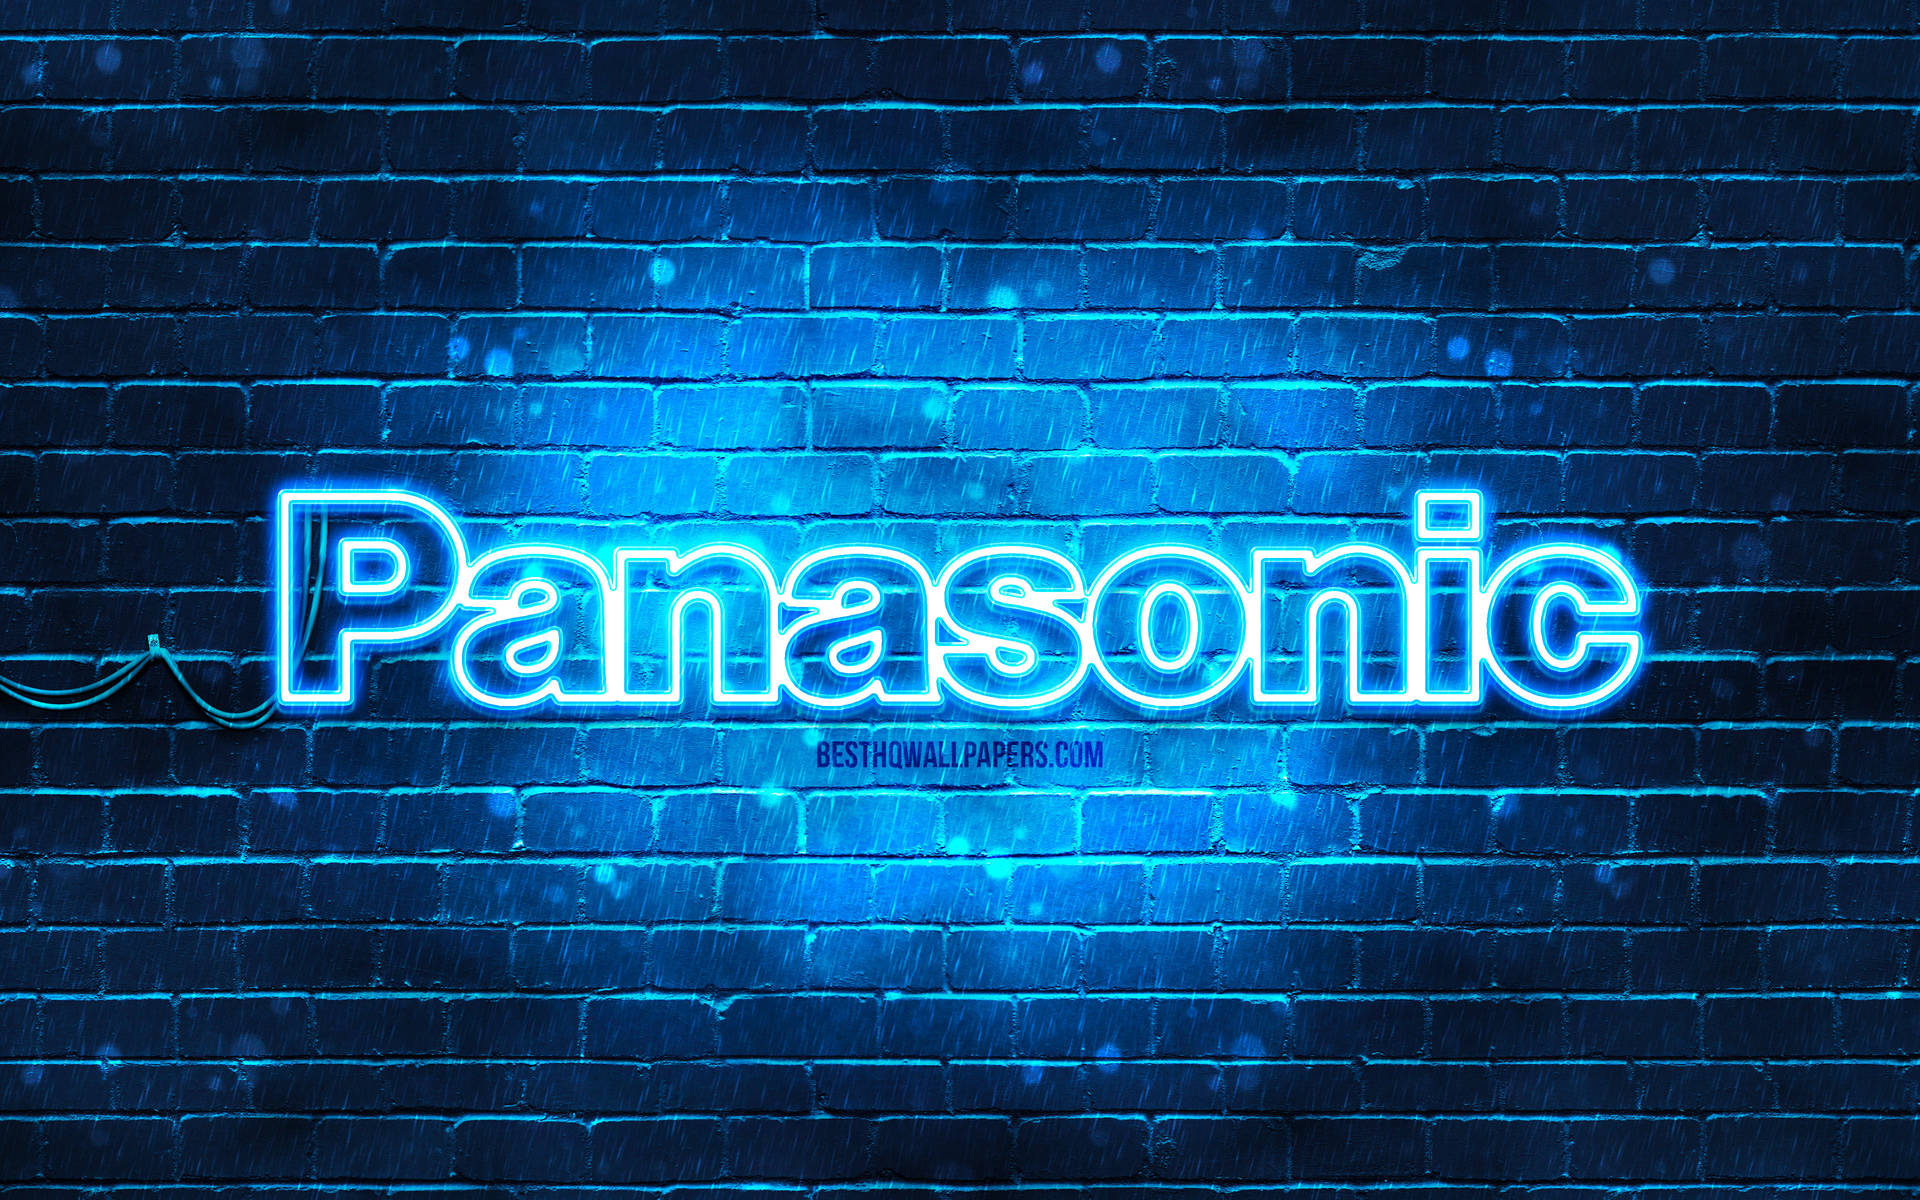 Panasonic Neon Blue Brick Wall Background